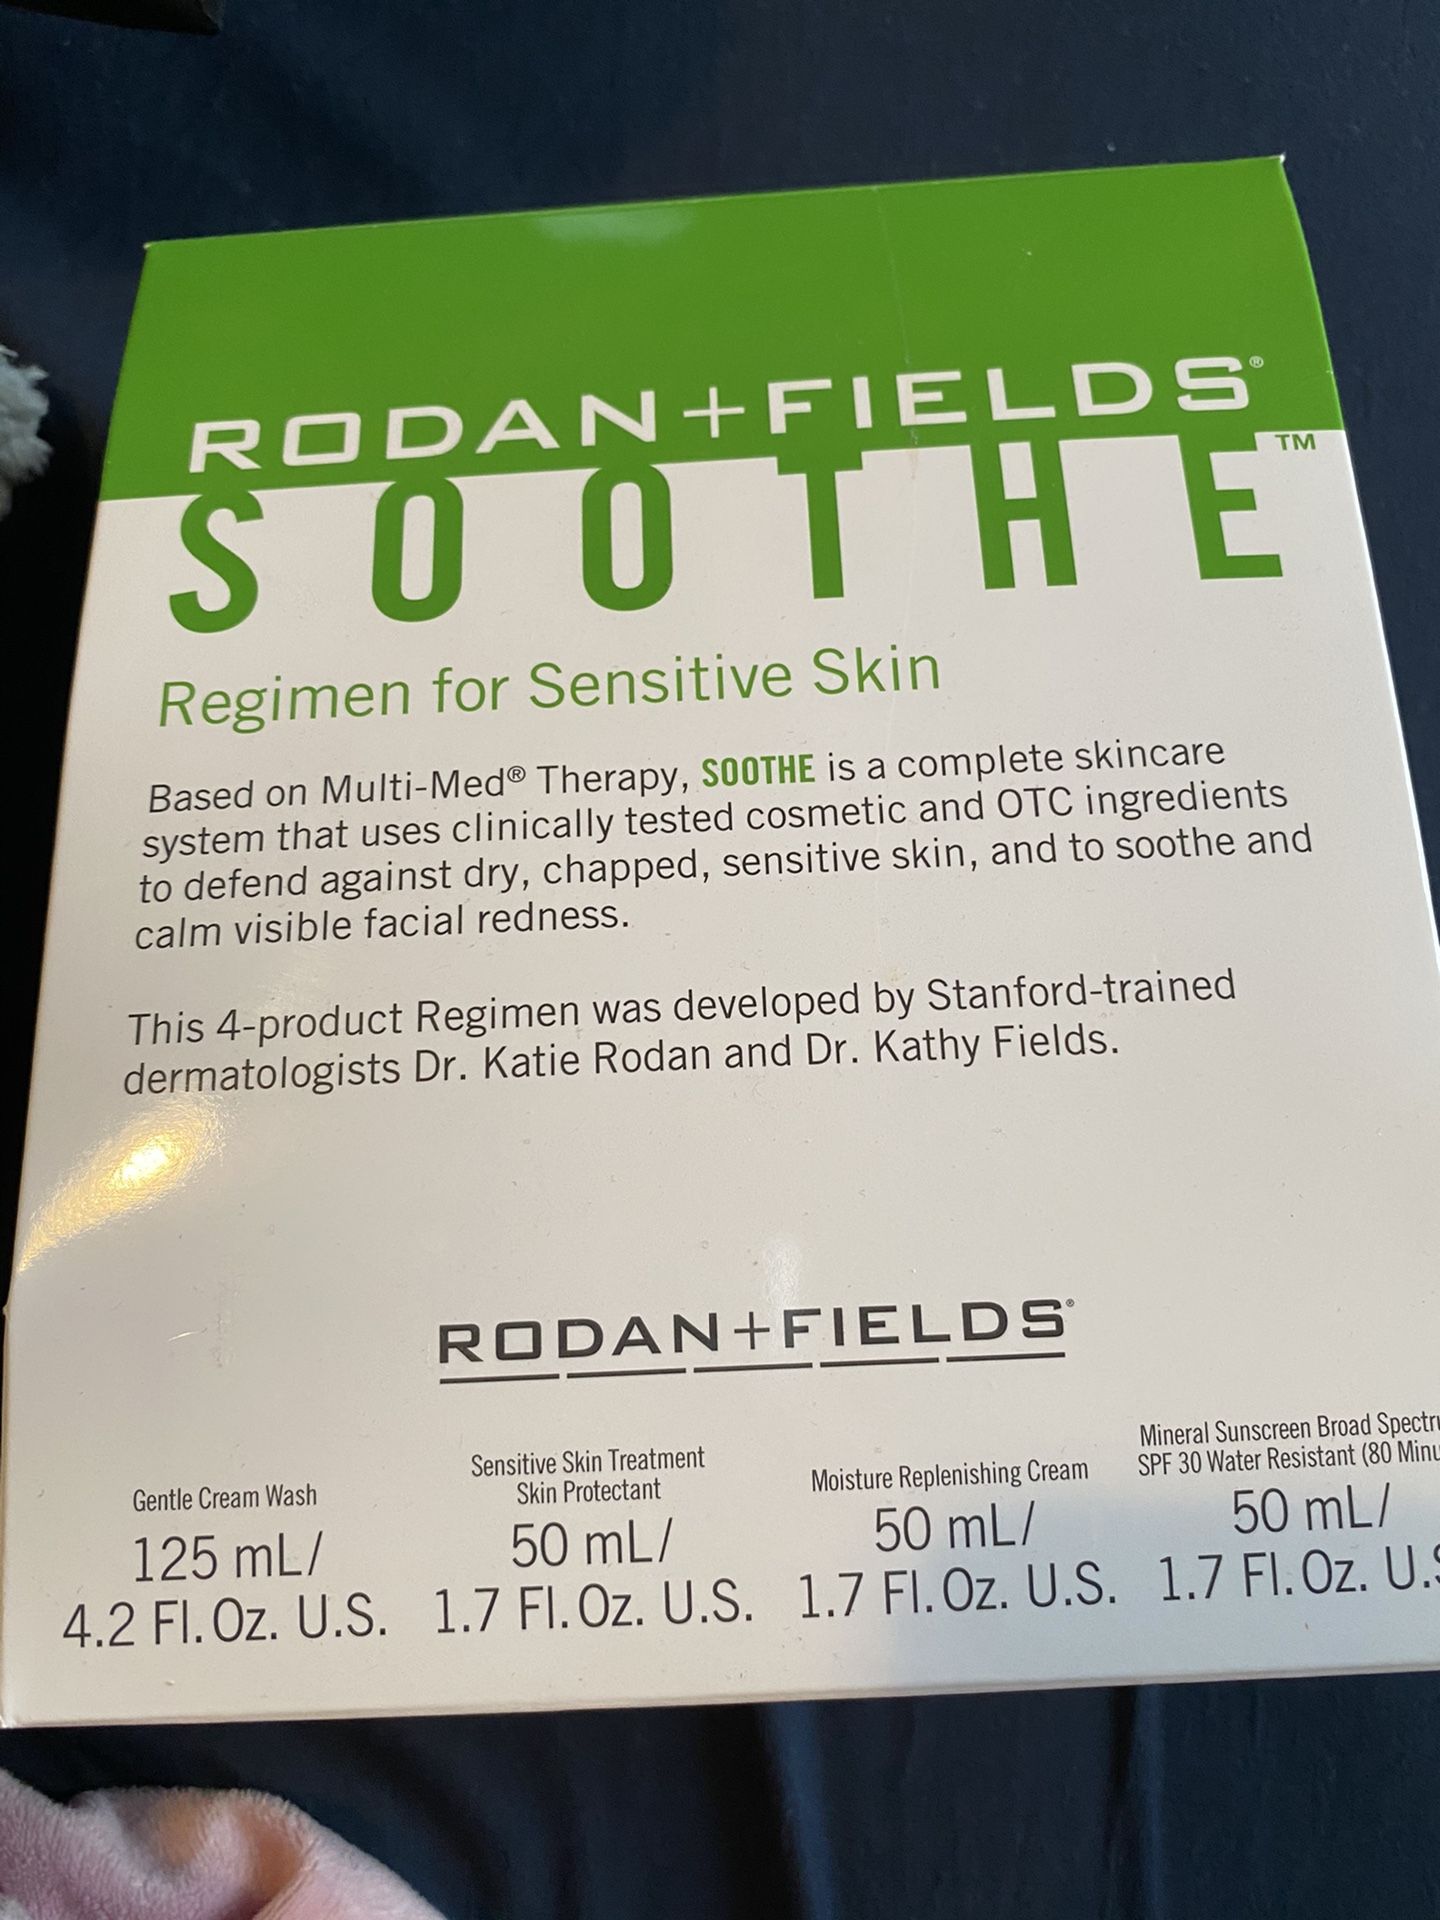 Rodan+Fields skincare